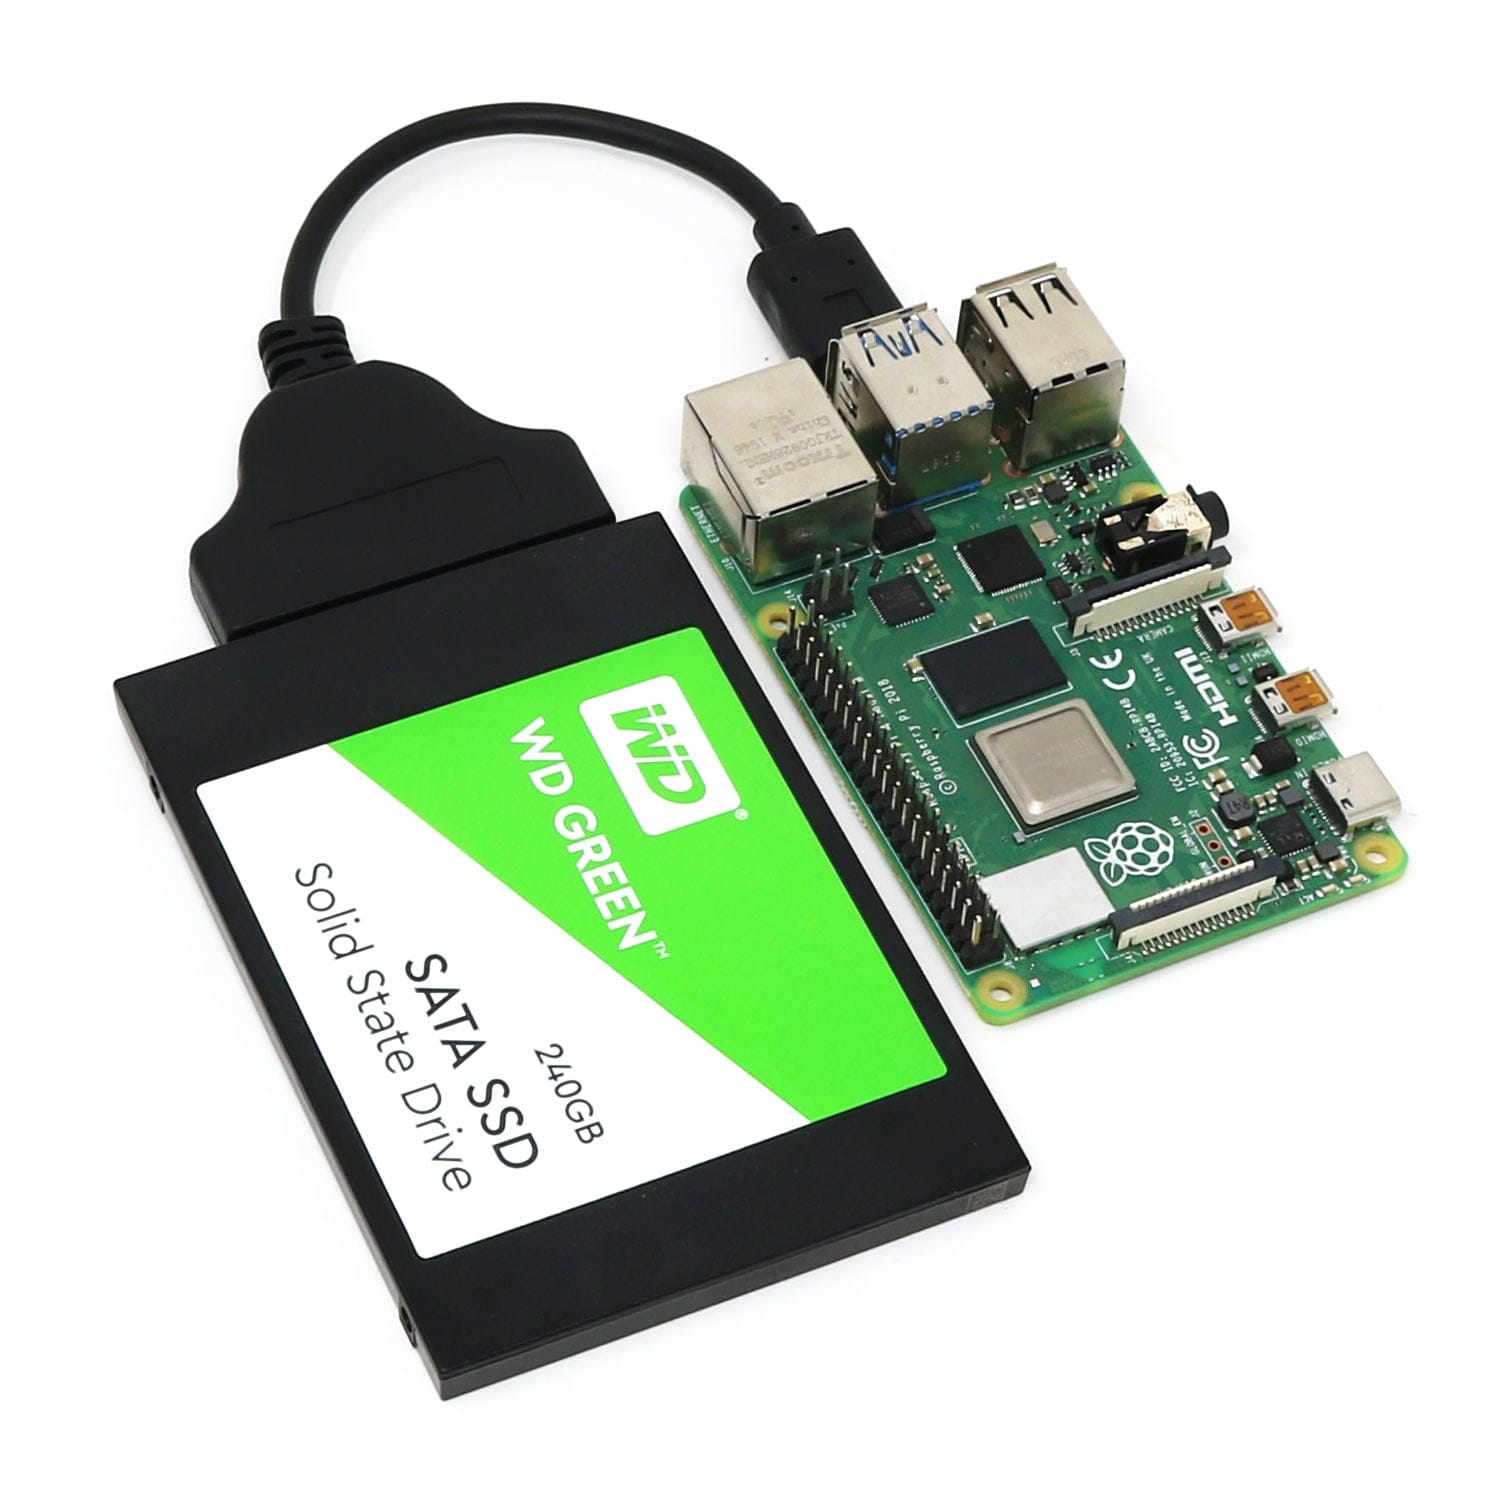 fange Bi fænomen SSD to USB 3.0 Cable for Raspberry Pi | The Pi Hut